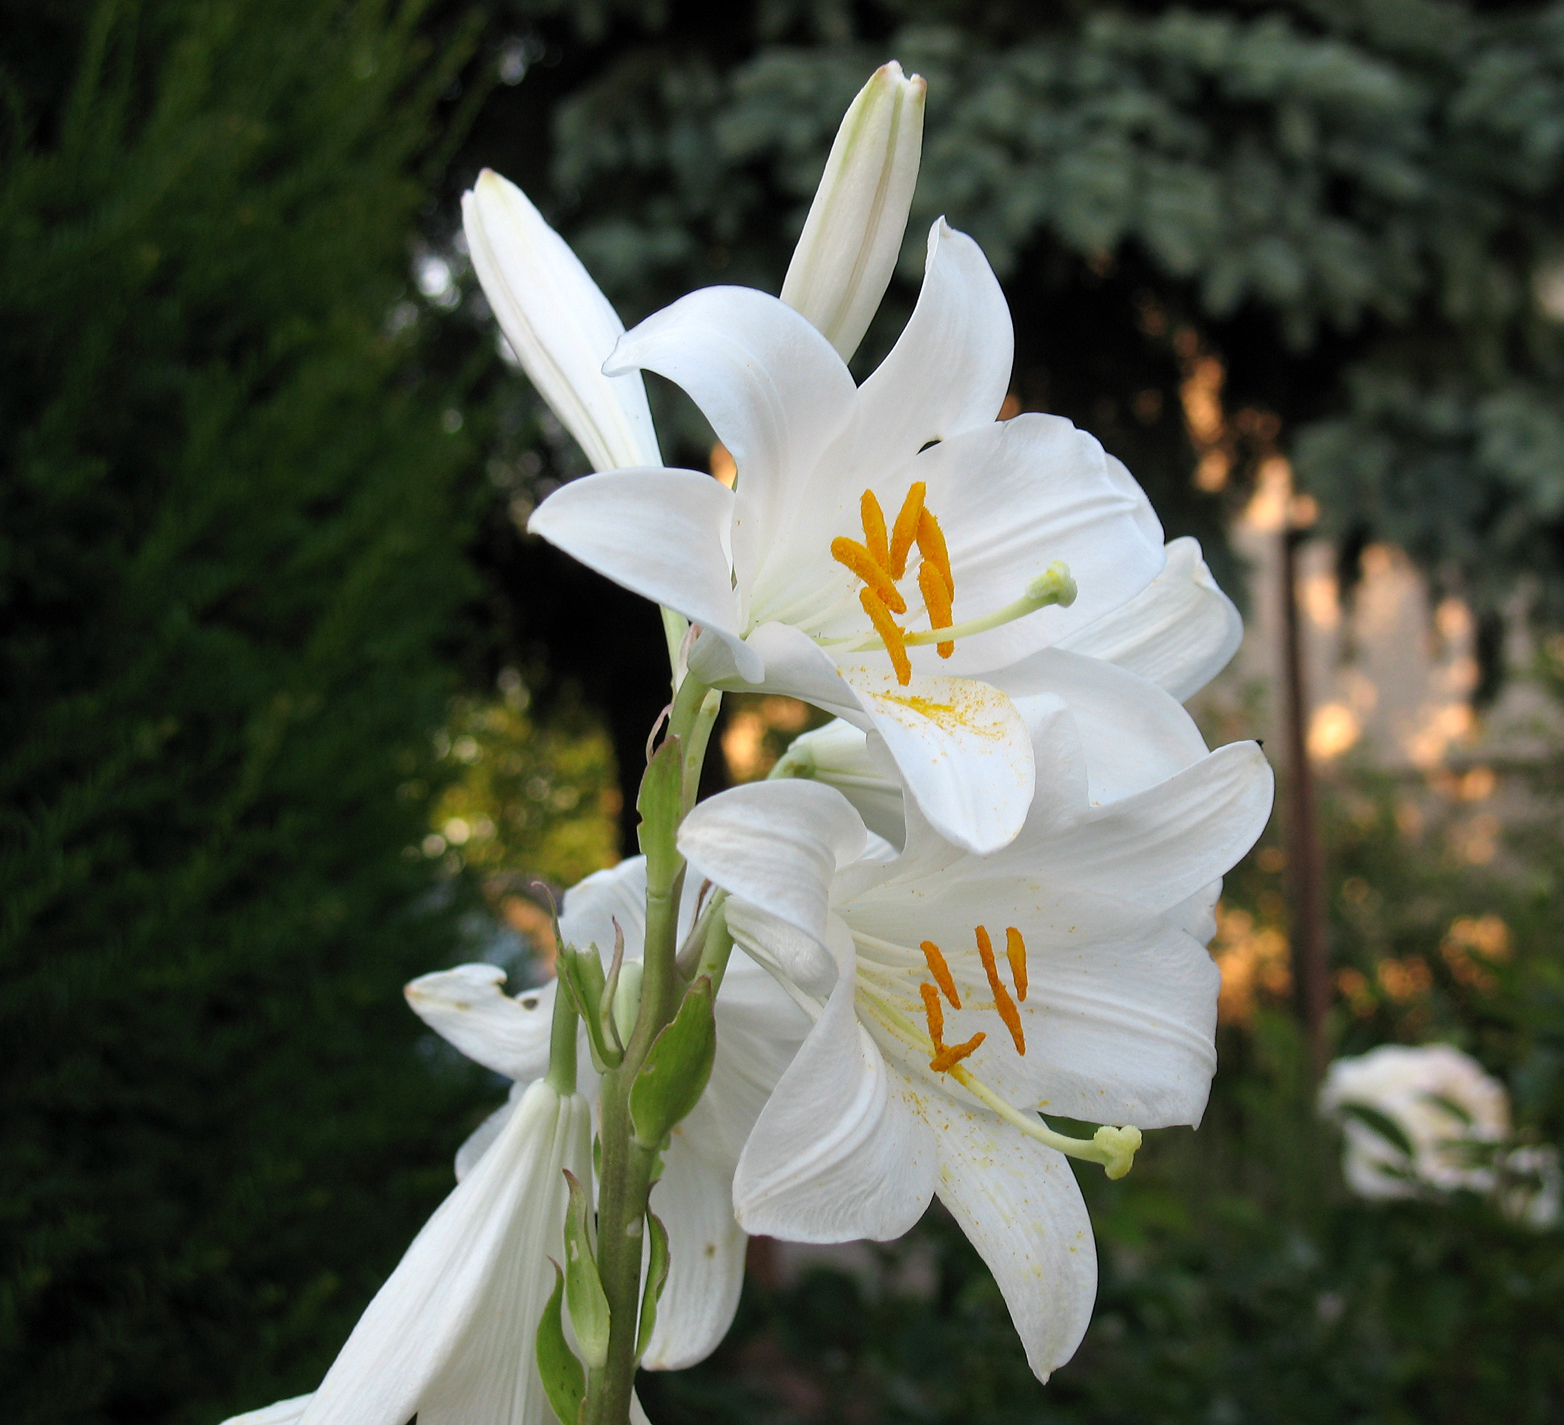 File:01-Lilium candidum madonna lily.jpg - Wikimedia Commons